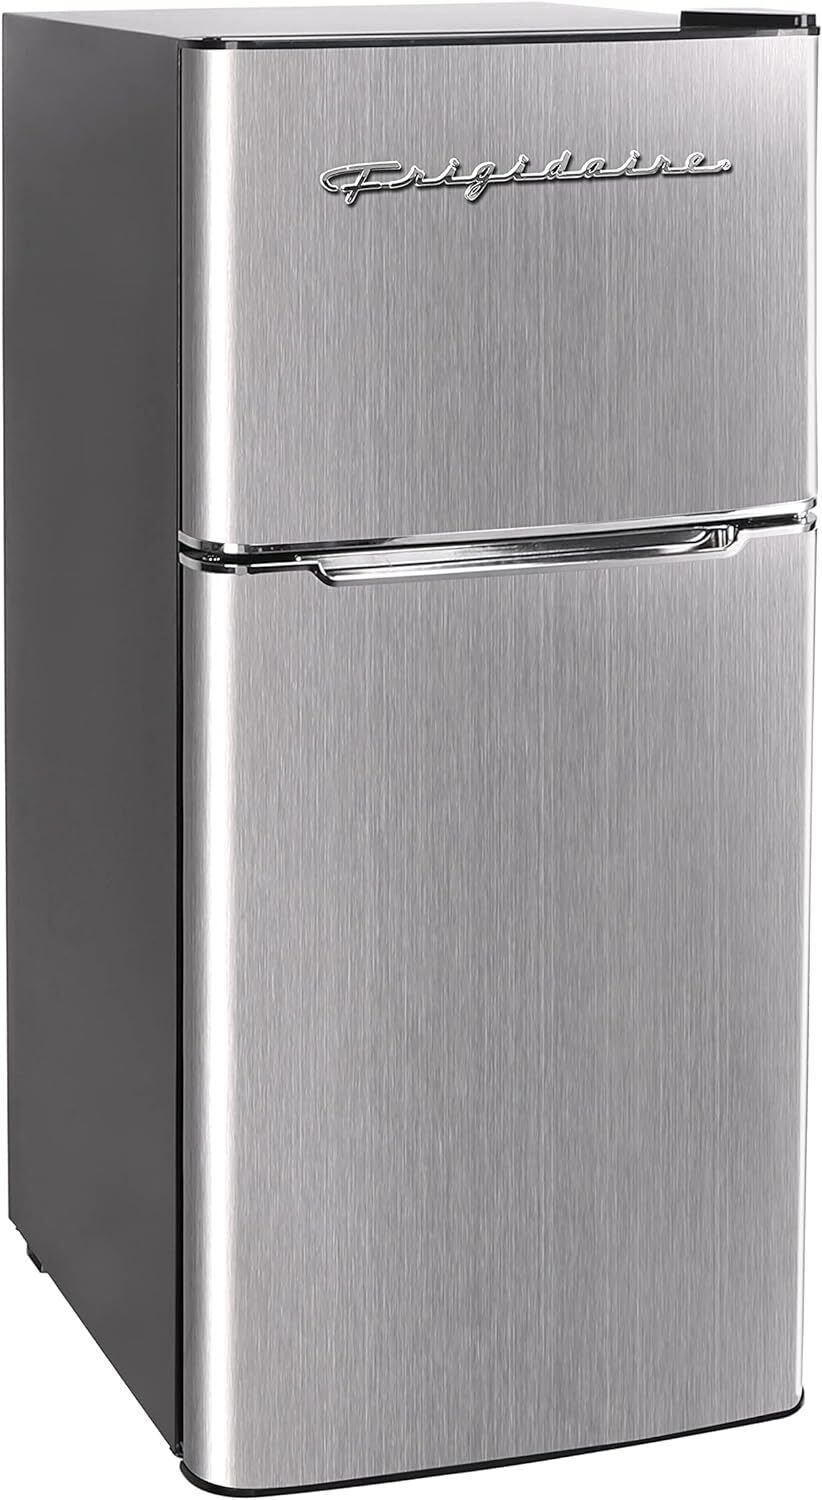 EFR451 2 Door Refrigerator/Freezer, 4.6 cu ft, Platinum Series, Stainless Steel